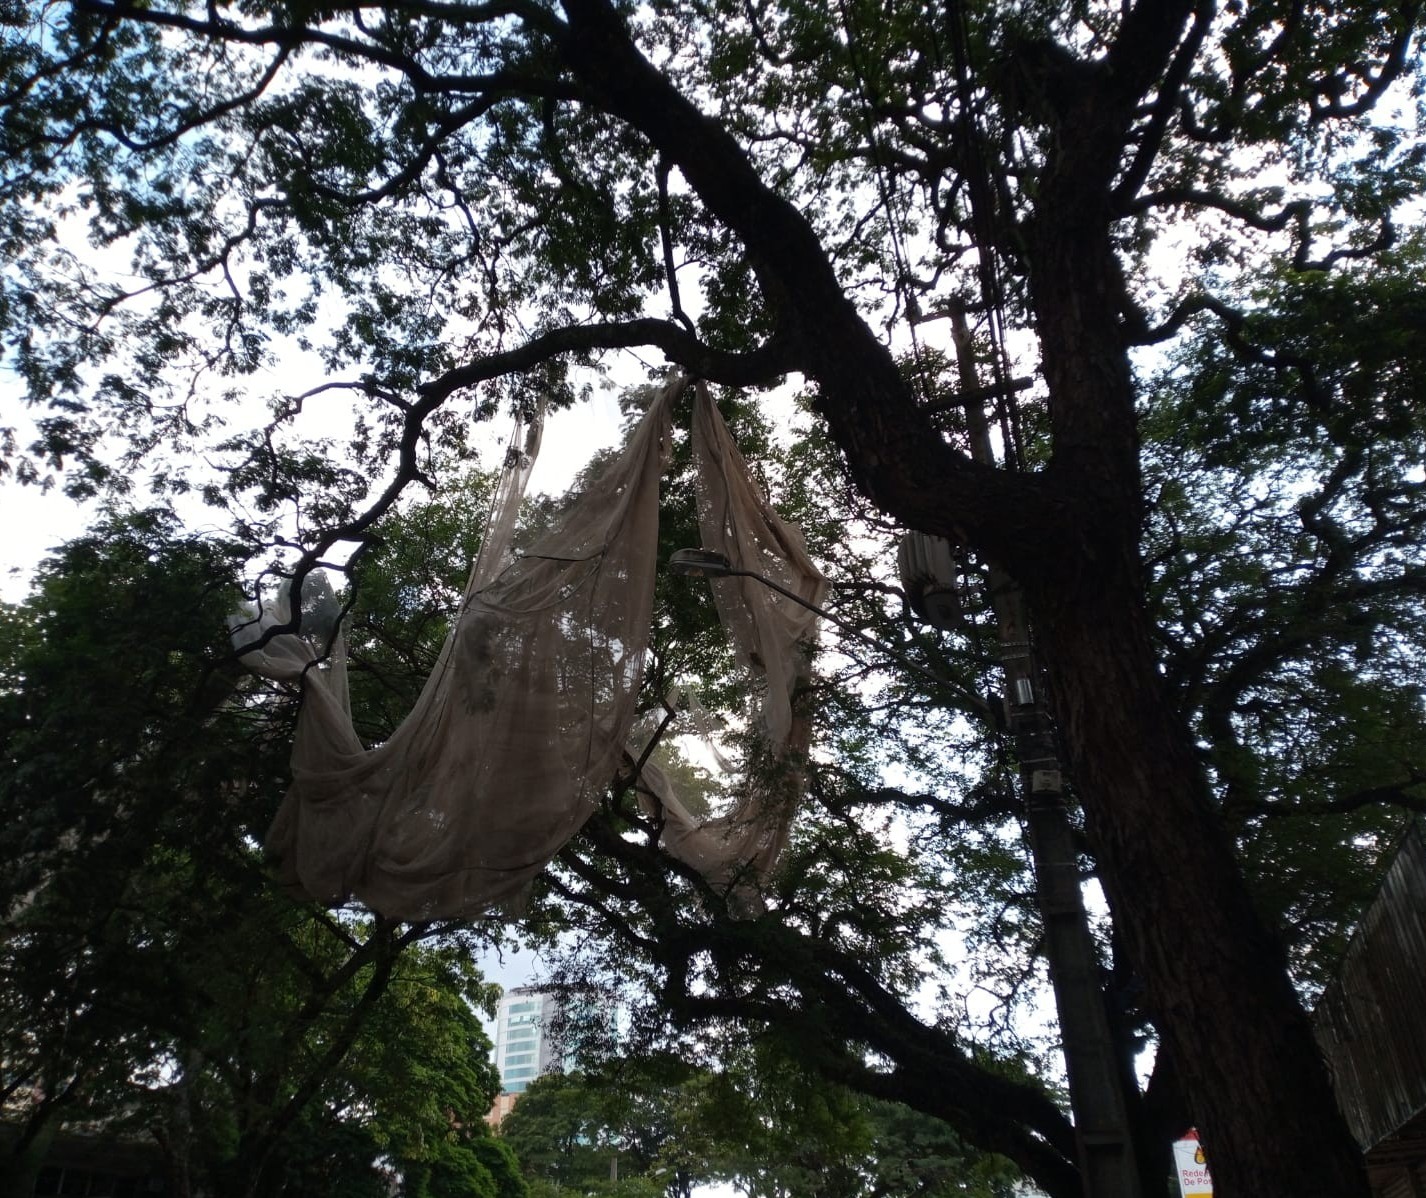 Rede presa em galhos de árvore na Avenida Brasil preocupa ouvinte